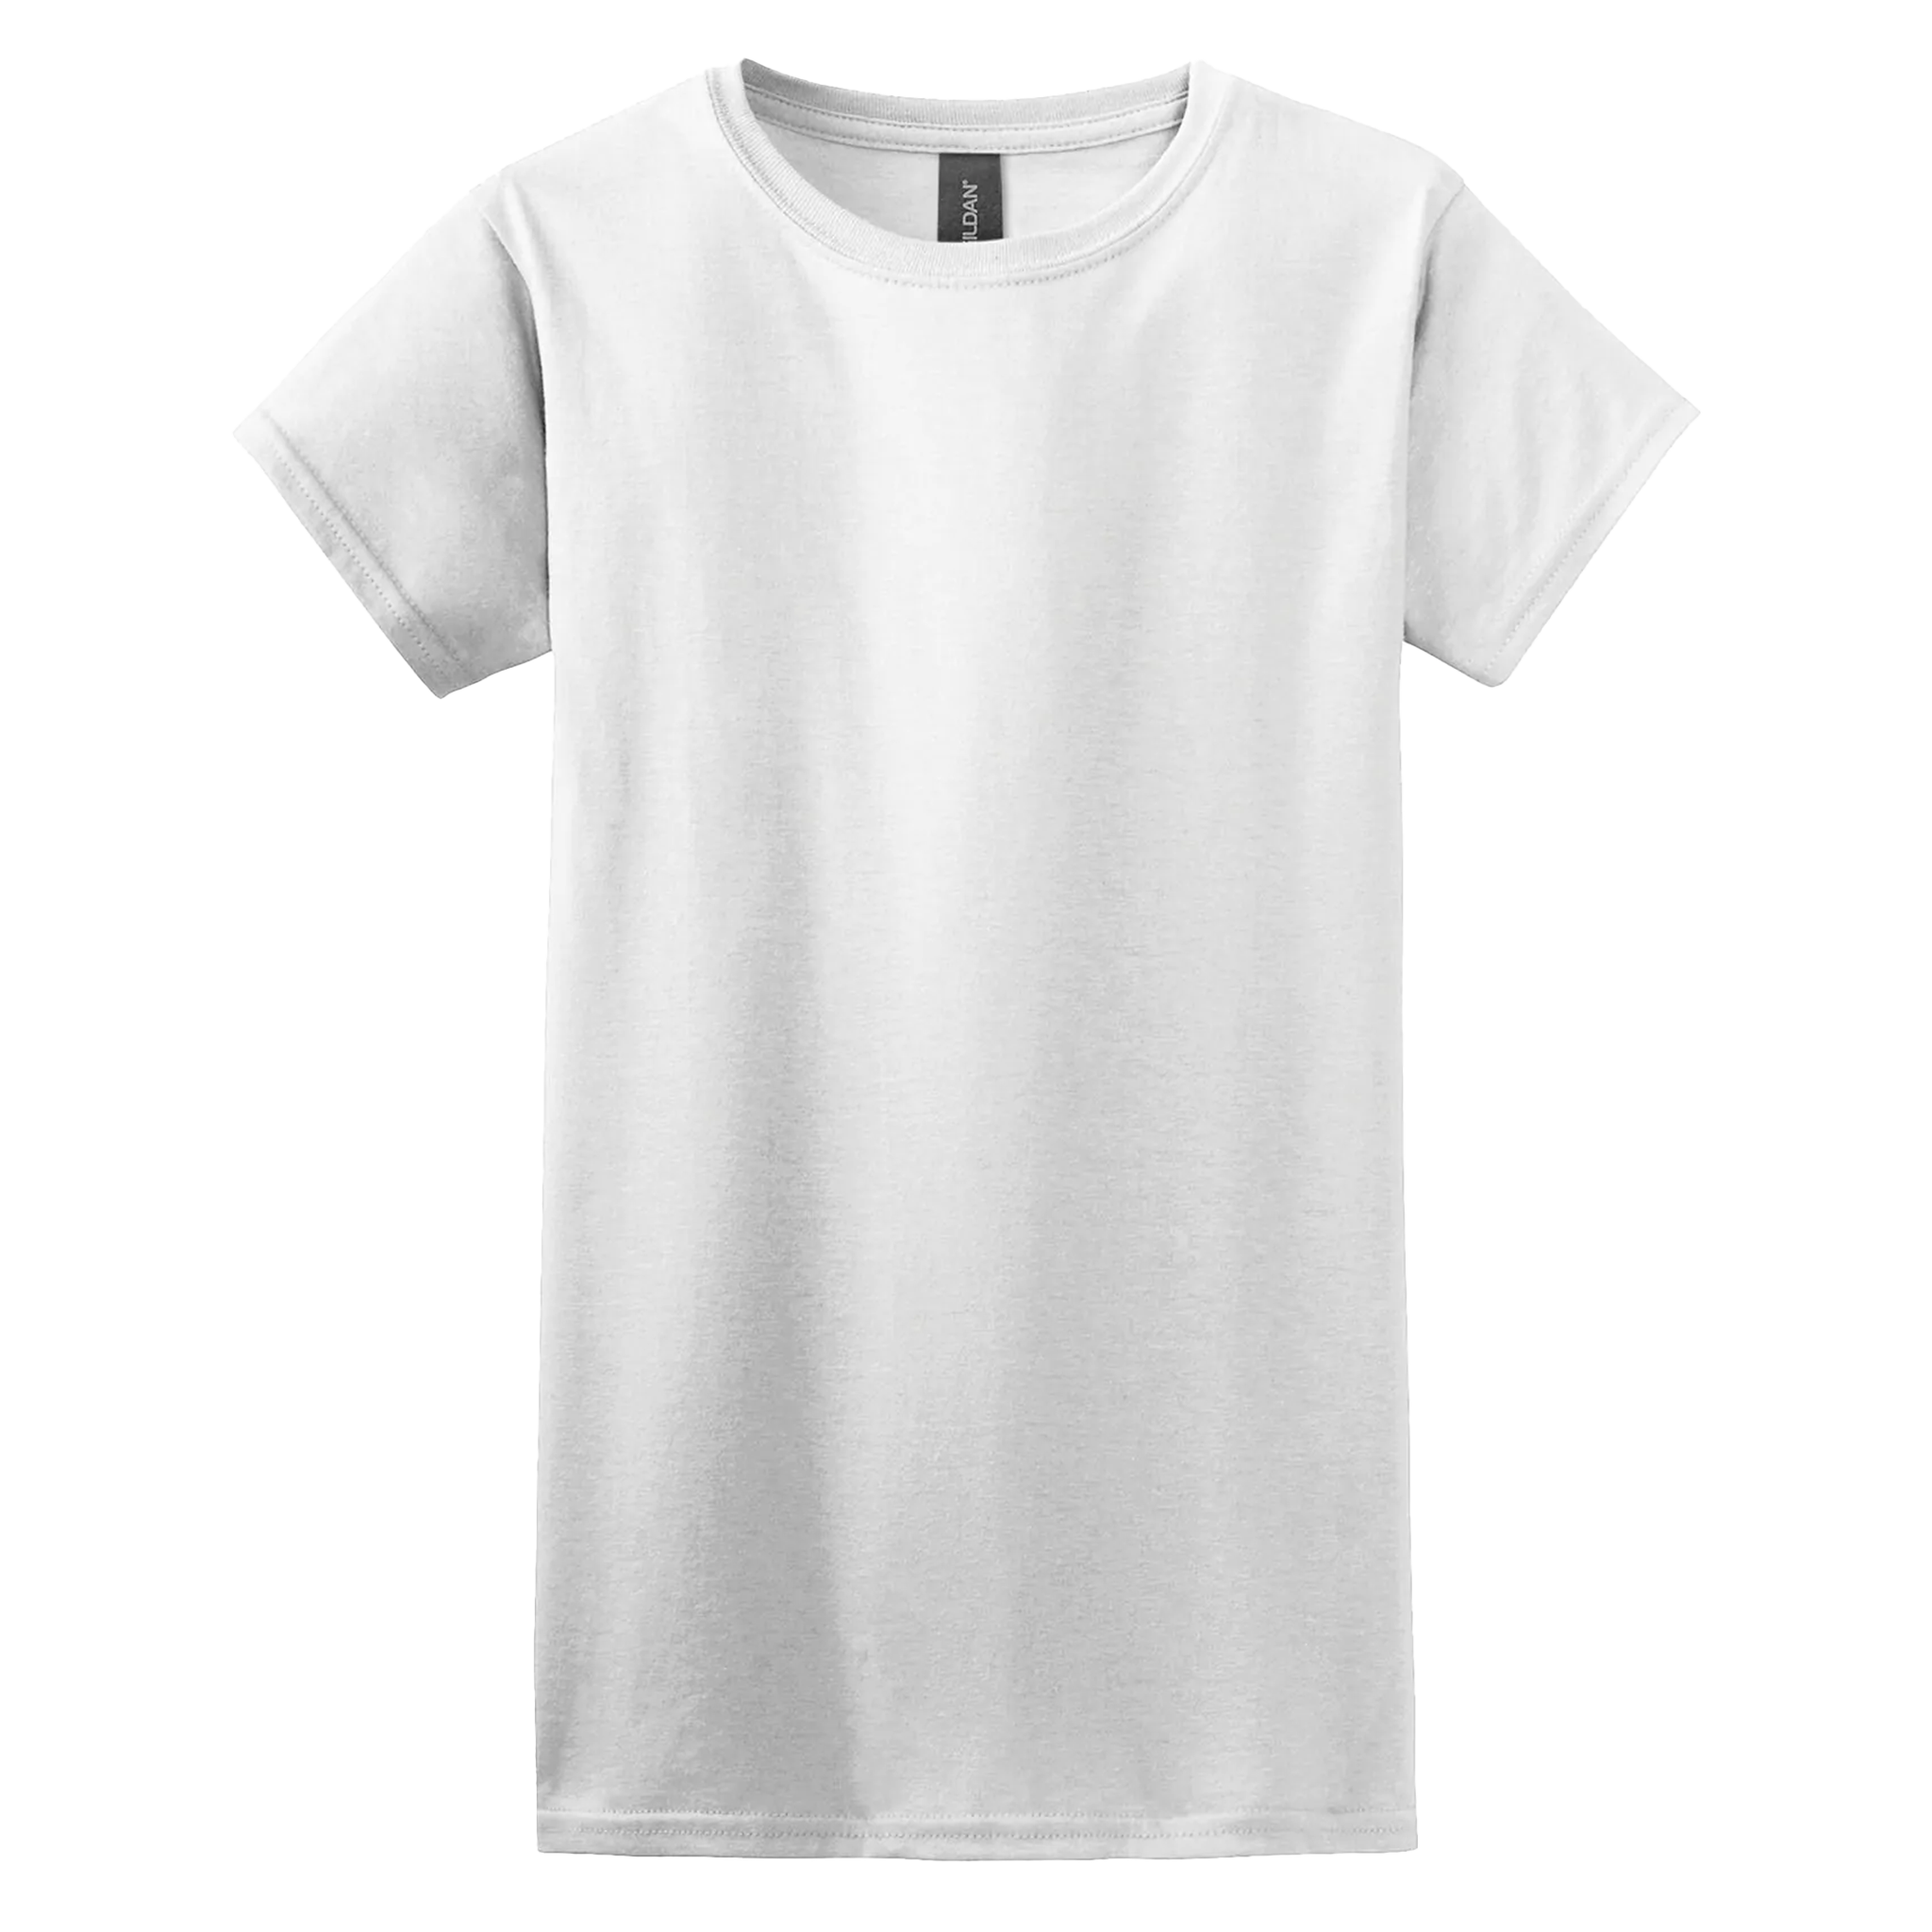 Gildan Softstyle T-Shirt - Women's Sizing S-3XL - White